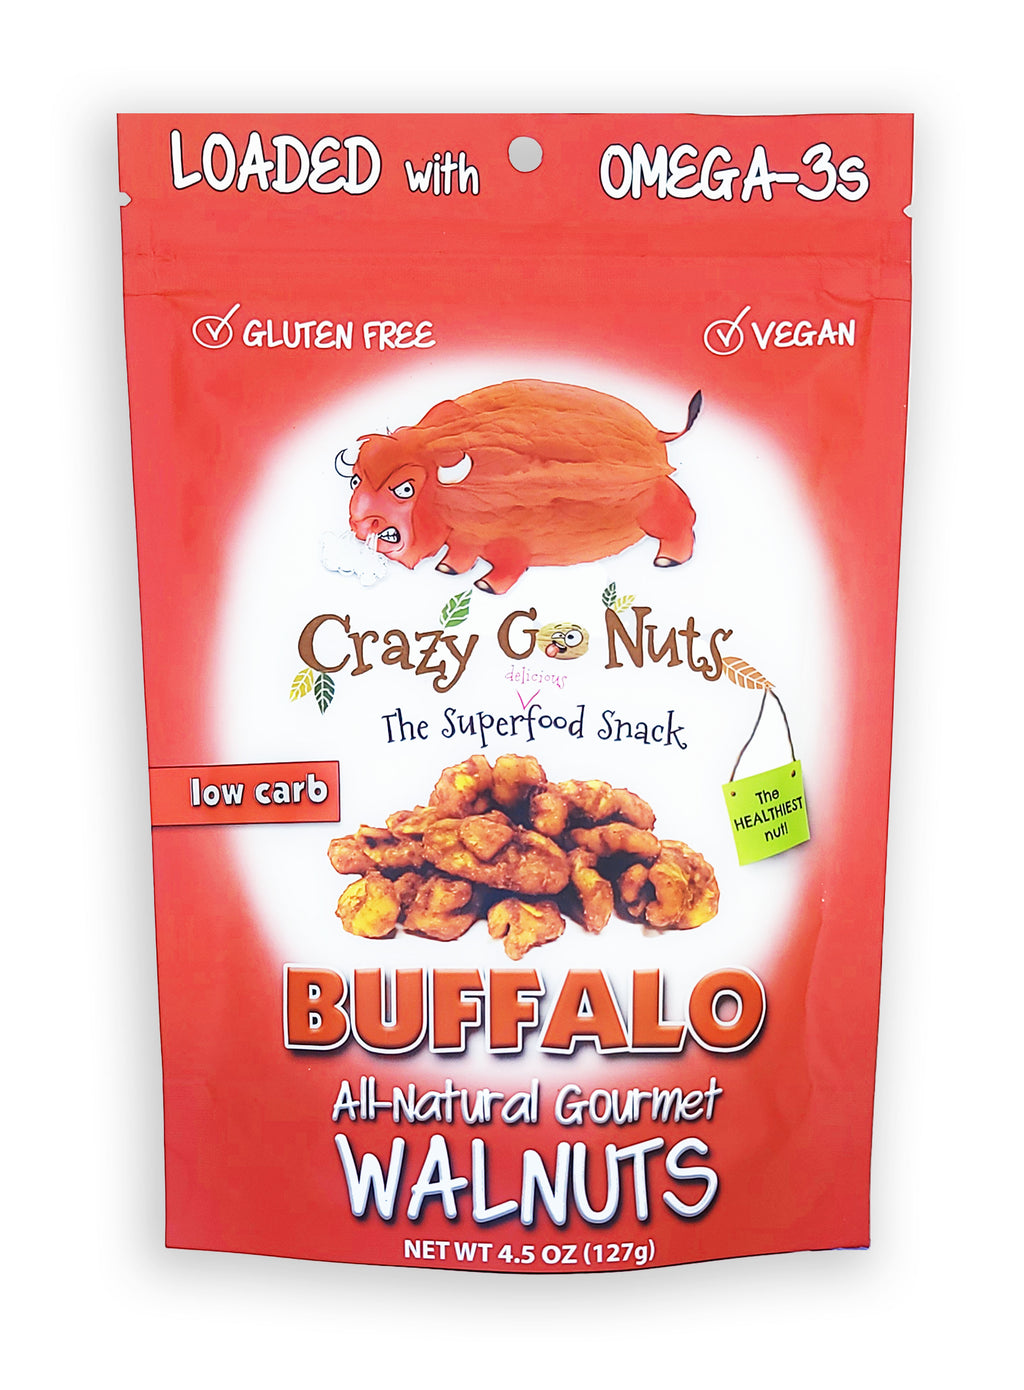 A bag of buffalo wing sauce-coated walnut snacks